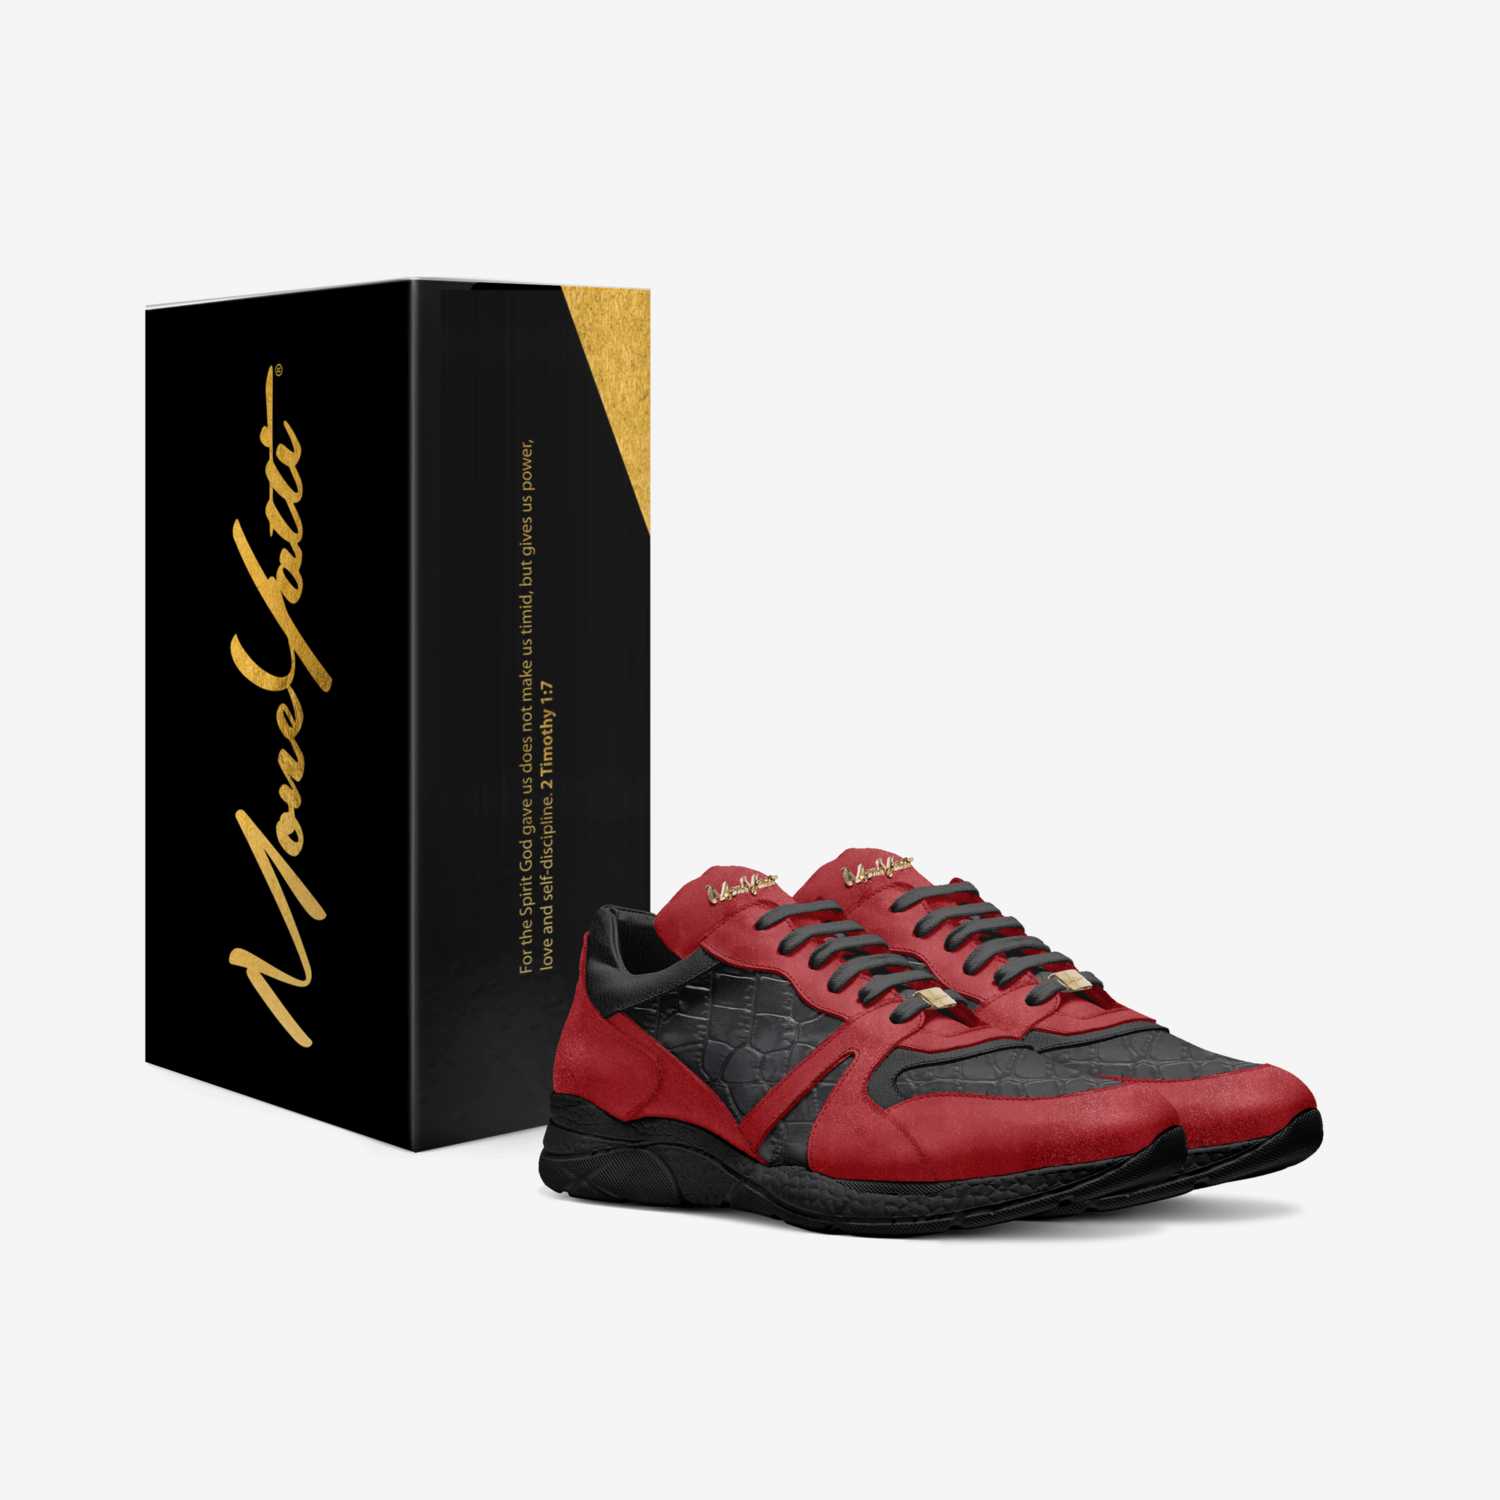 Nem P10 custom made in Italy shoes by Moneyatti Brand | Box view